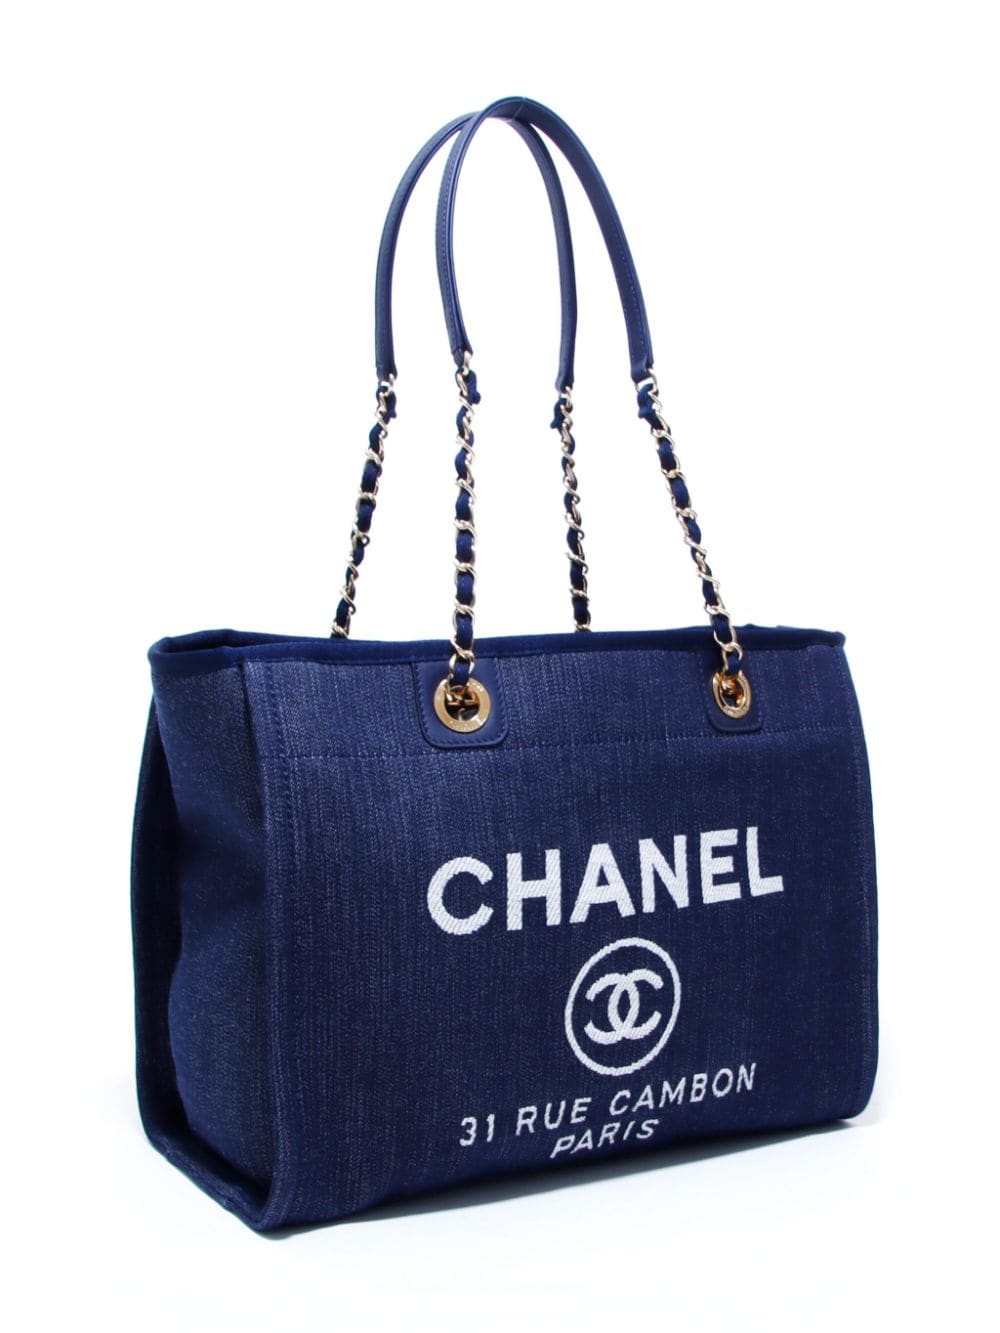 Chanel - Deauville - Pre Loved - SHW